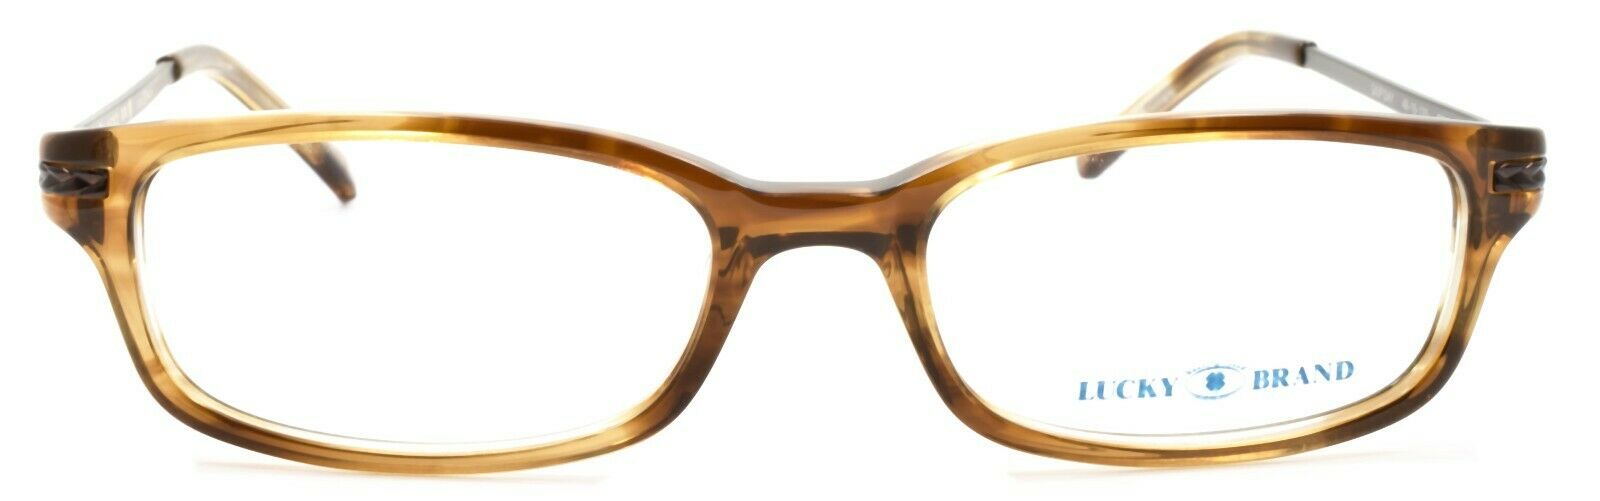 2-LUCKY BRAND Skip Day Kids Unisex Eyeglasses Frames 48-16-135 Brown-751286214819-IKSpecs